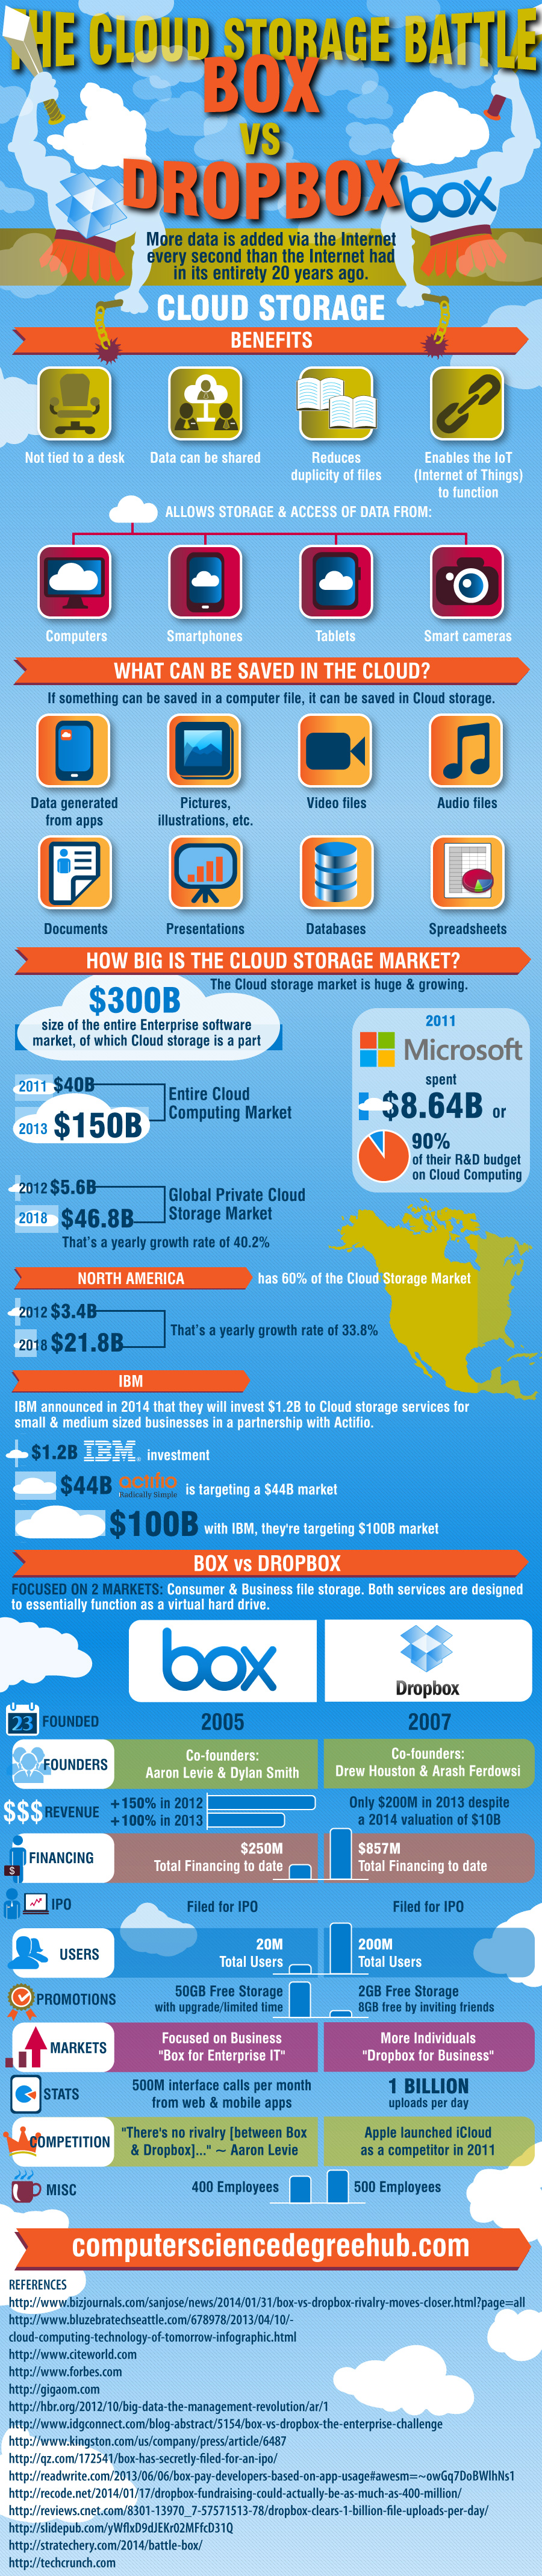 The Cloud Storage Battle Box vs. Dropbox